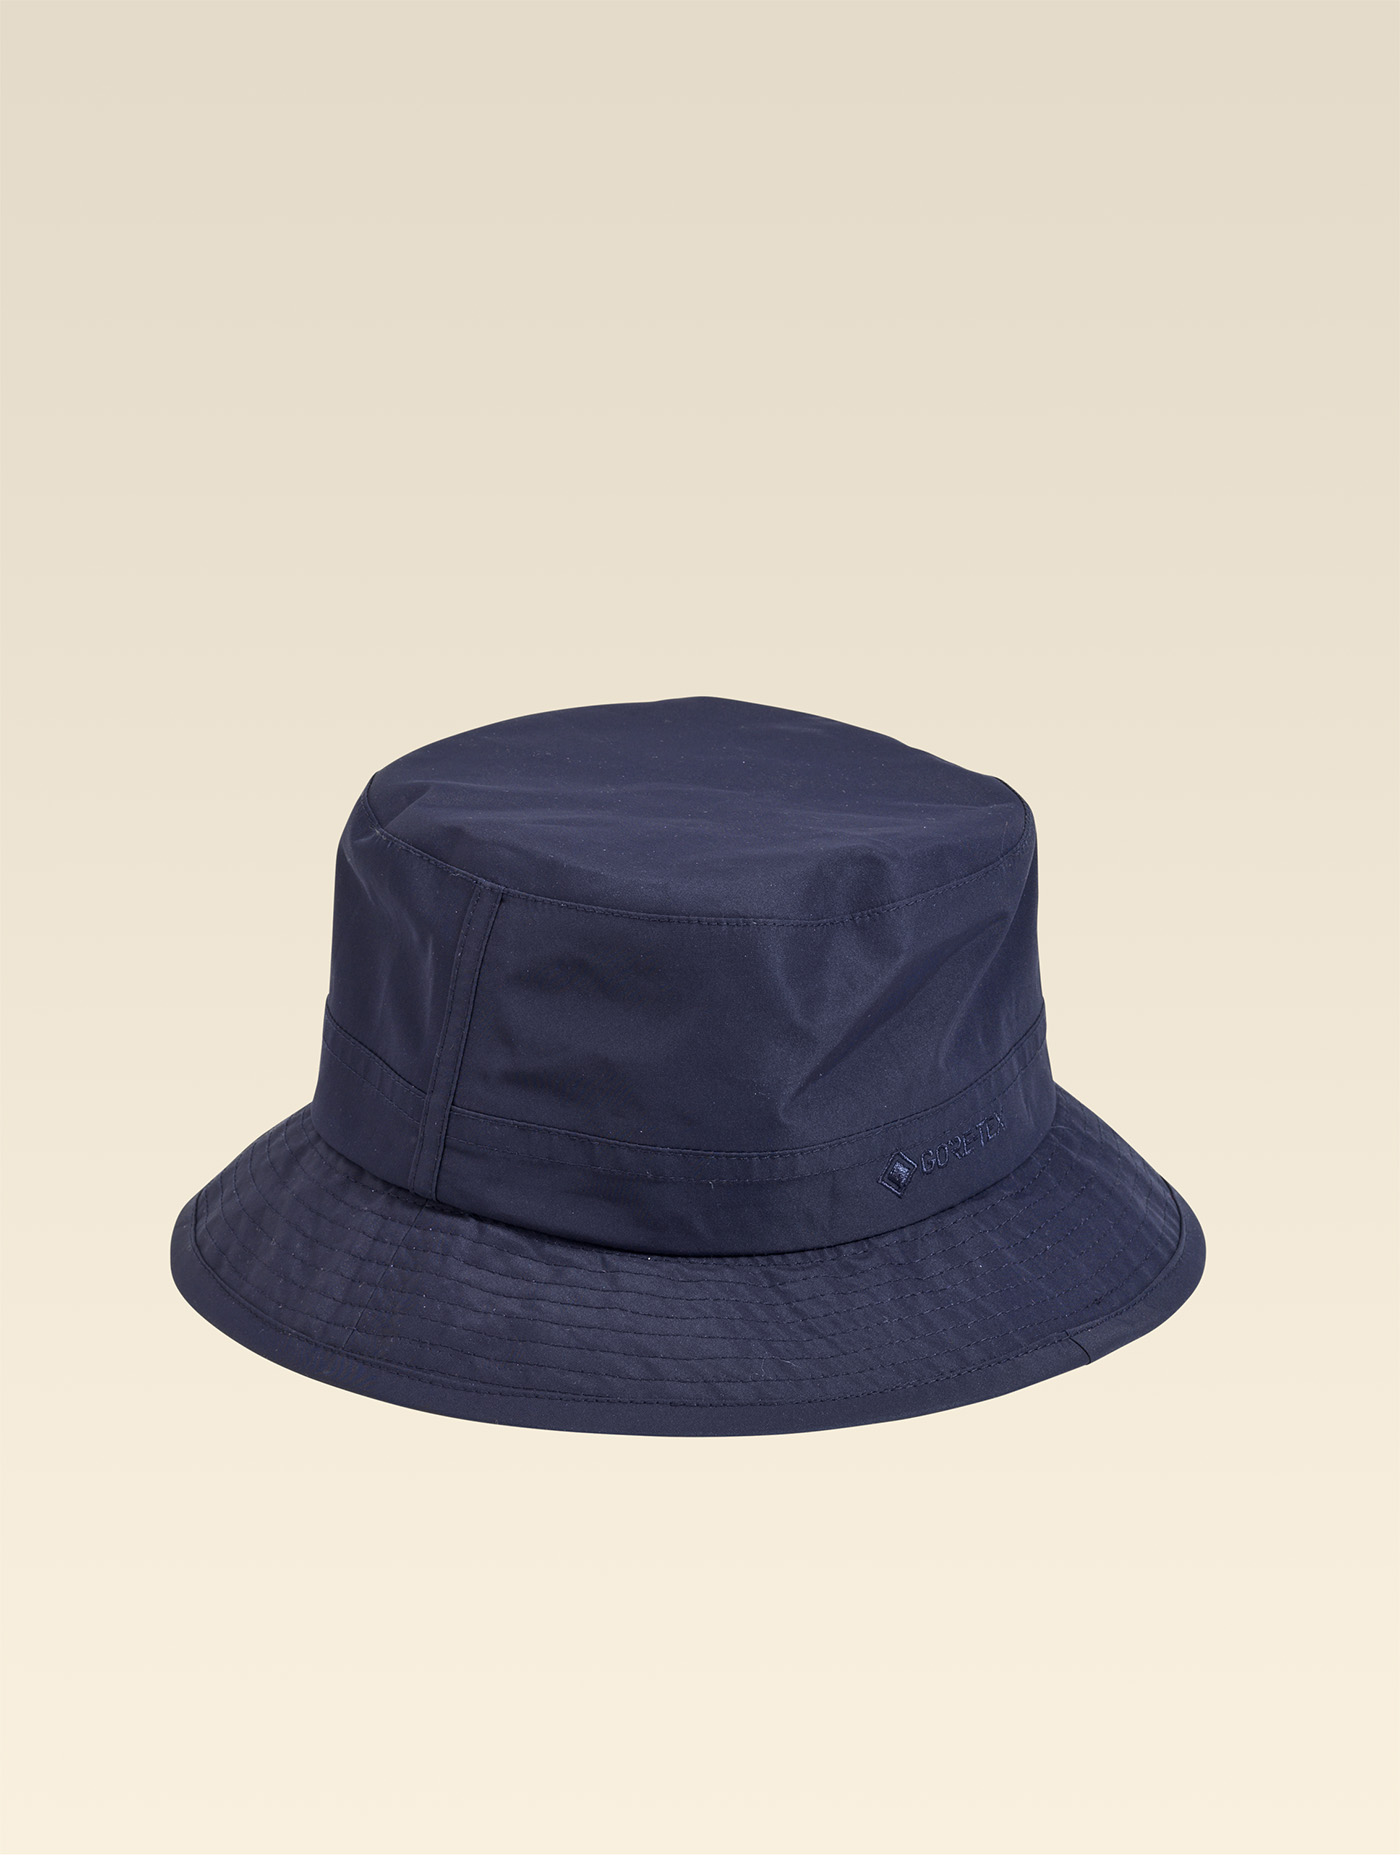 Men's hat and cap | Aigle